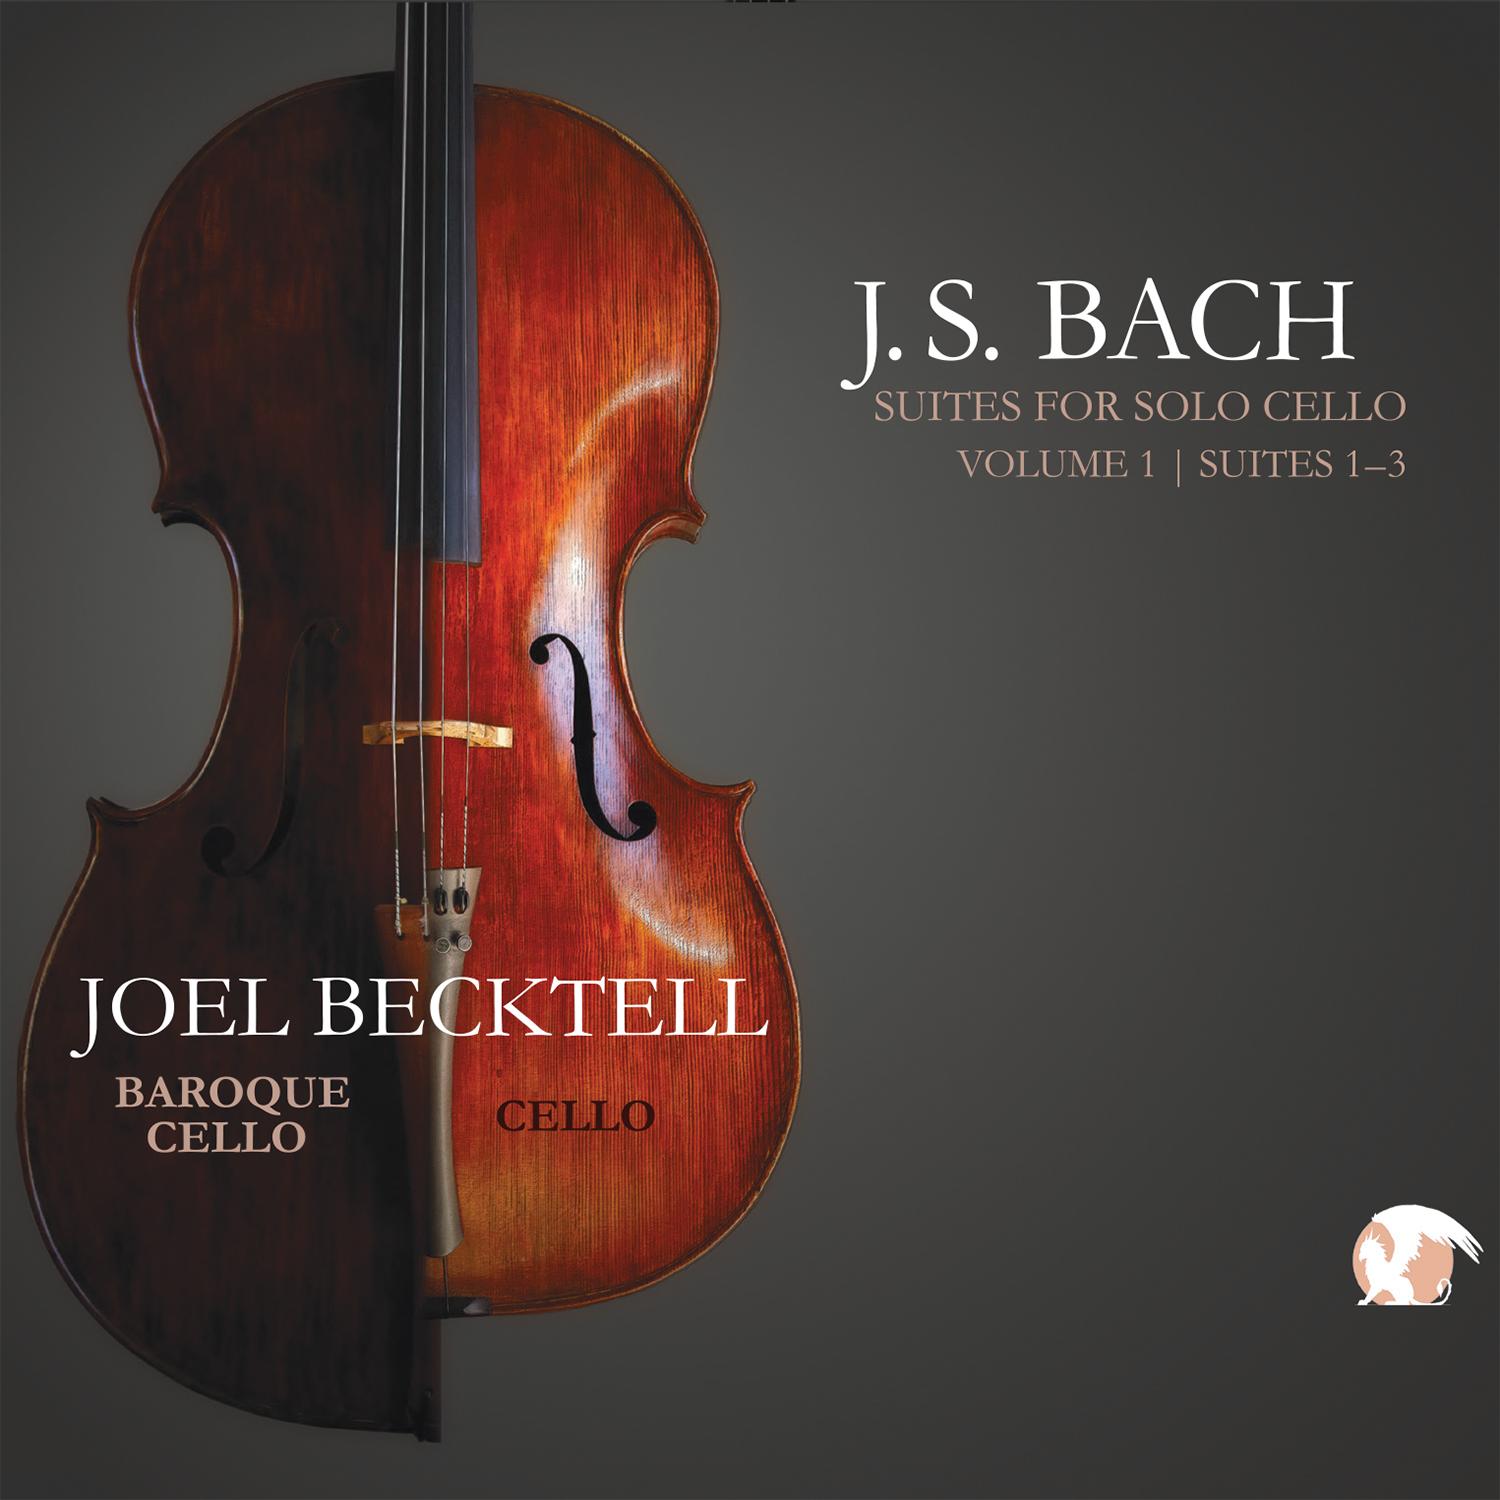 Suite No. 3 in C Major for Solo Cello, BWV 1009: Sarabande